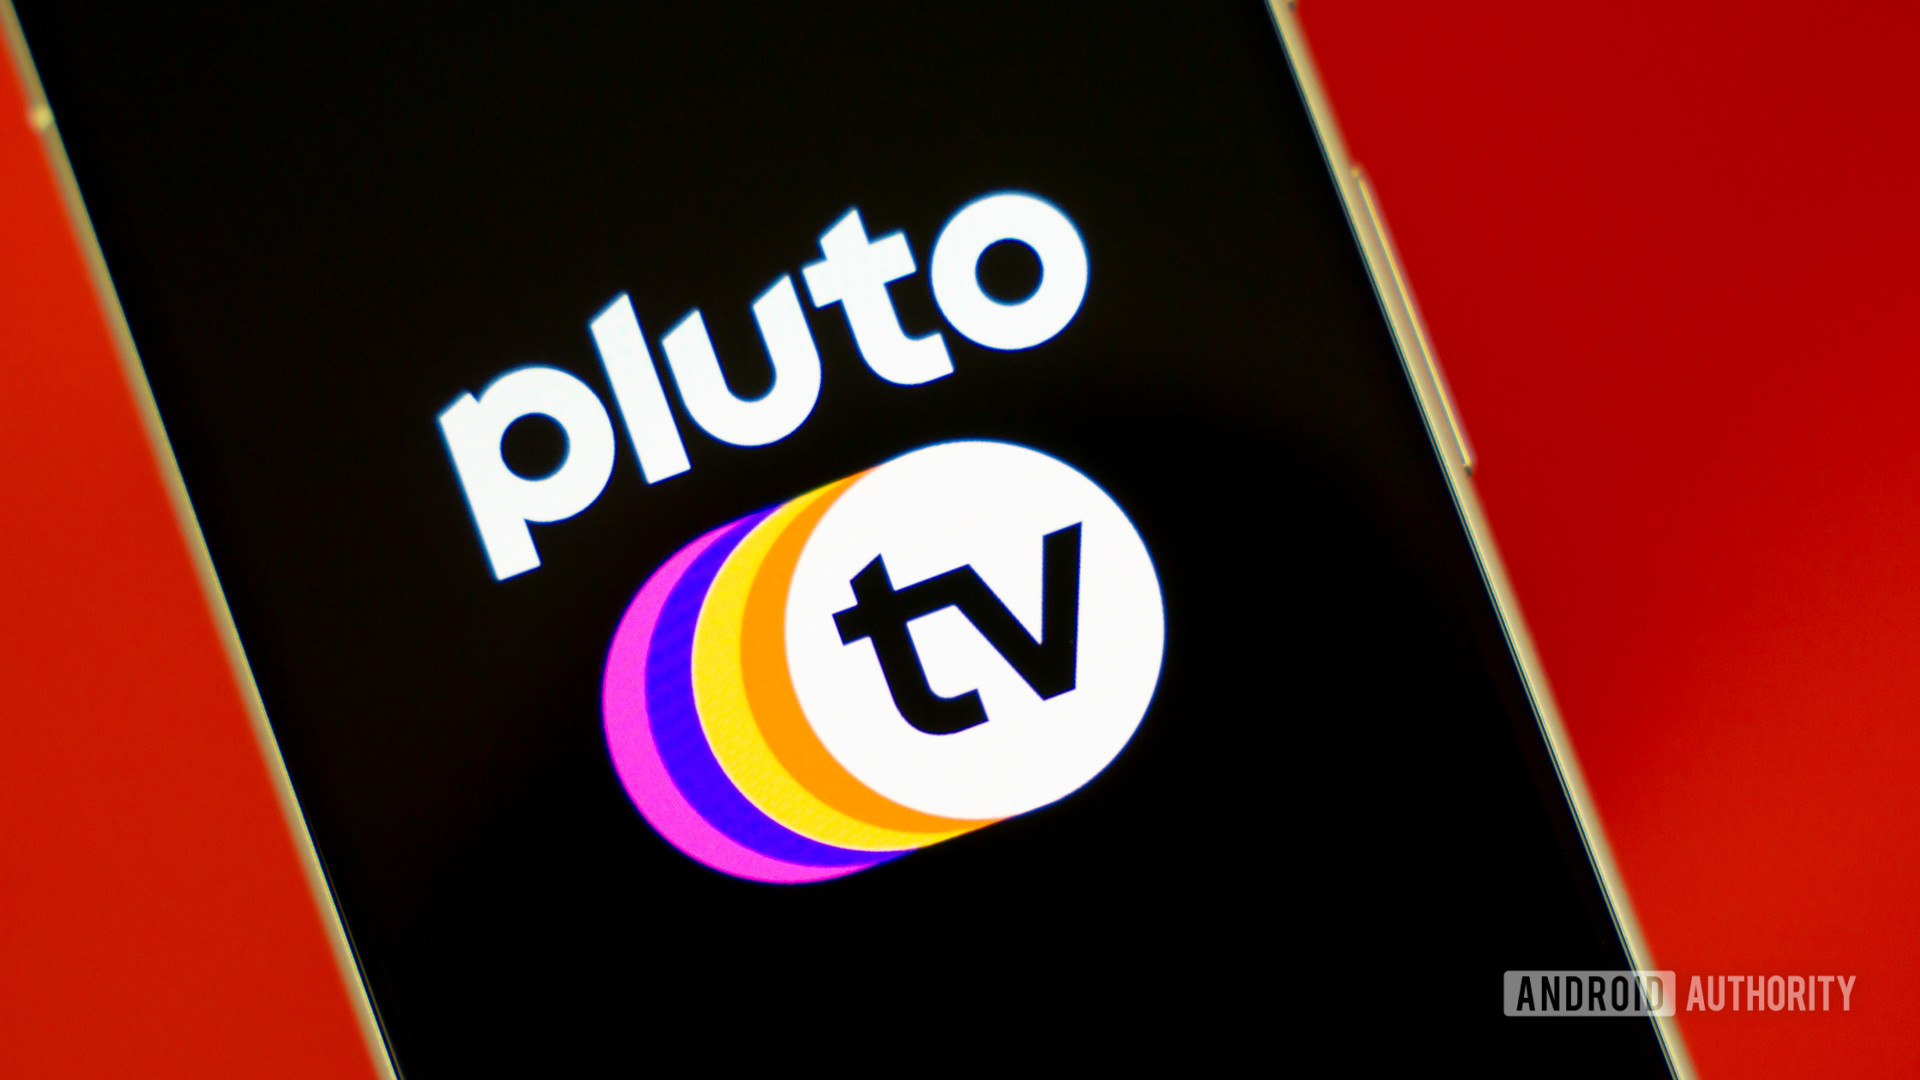 Stock photo of Pluto TV logo on phone 2